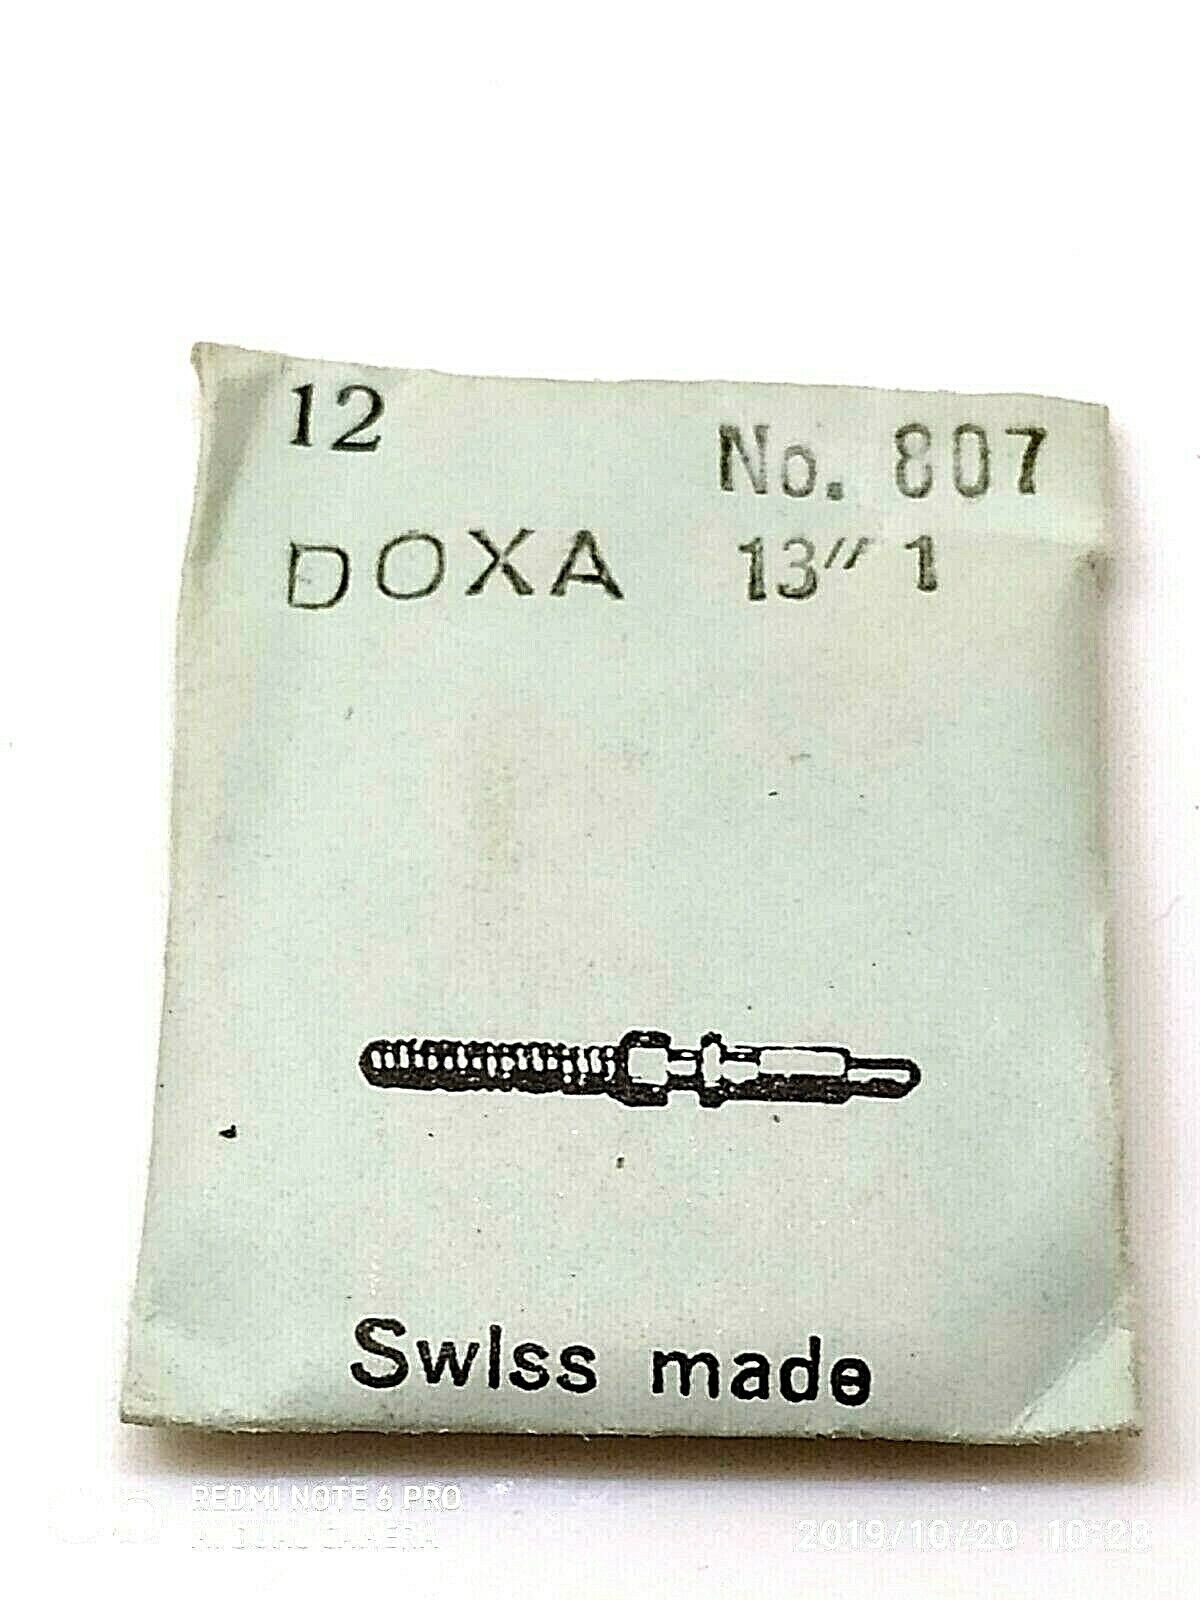 12 X DOXA 13" 1 Tiges-de-remontage montres Ronda n 807 swiss made